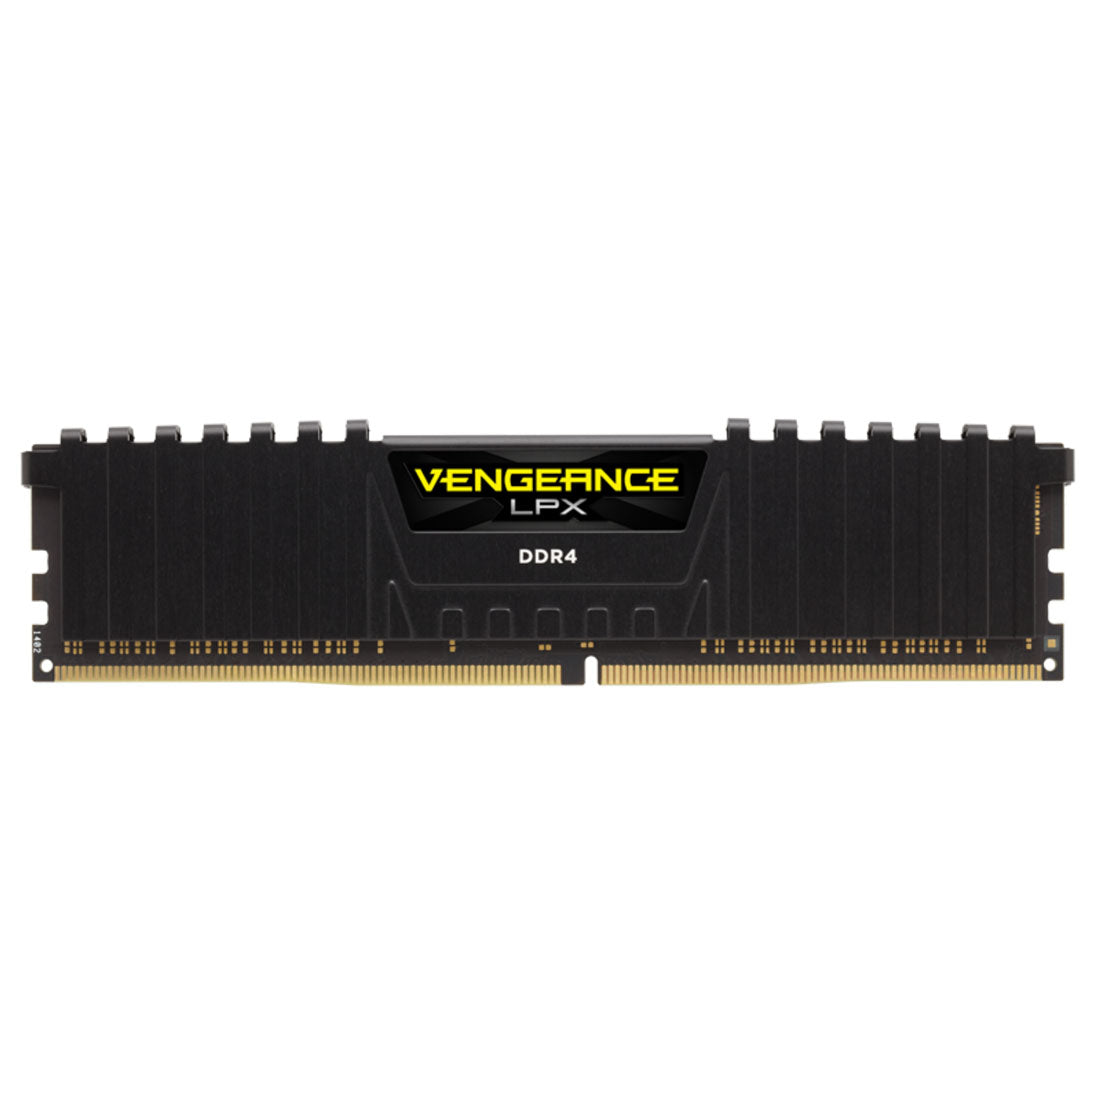 Corsair Vengeance LPX RAM DDR4 3000MHz Desktop Memory